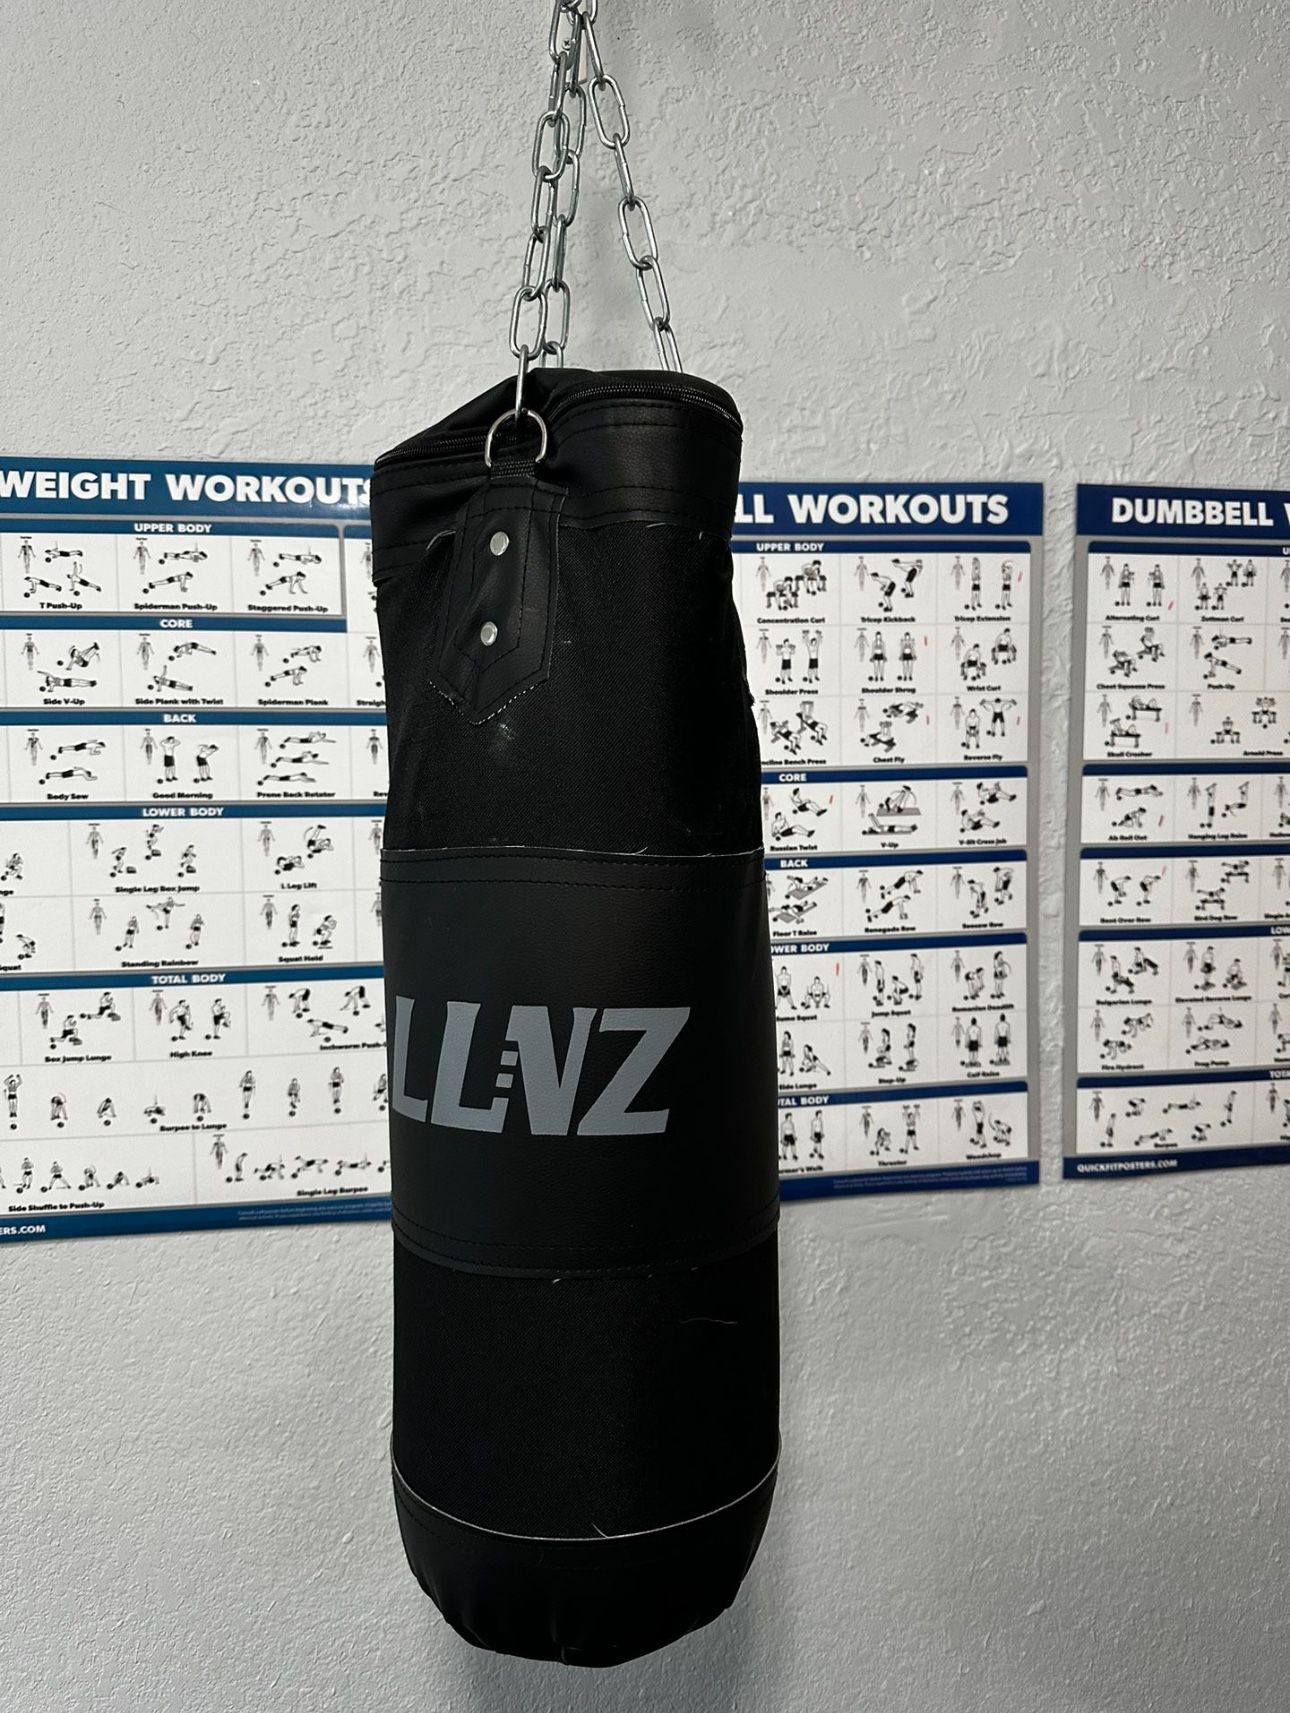 LLNZ Youth Boxing Punching Bag